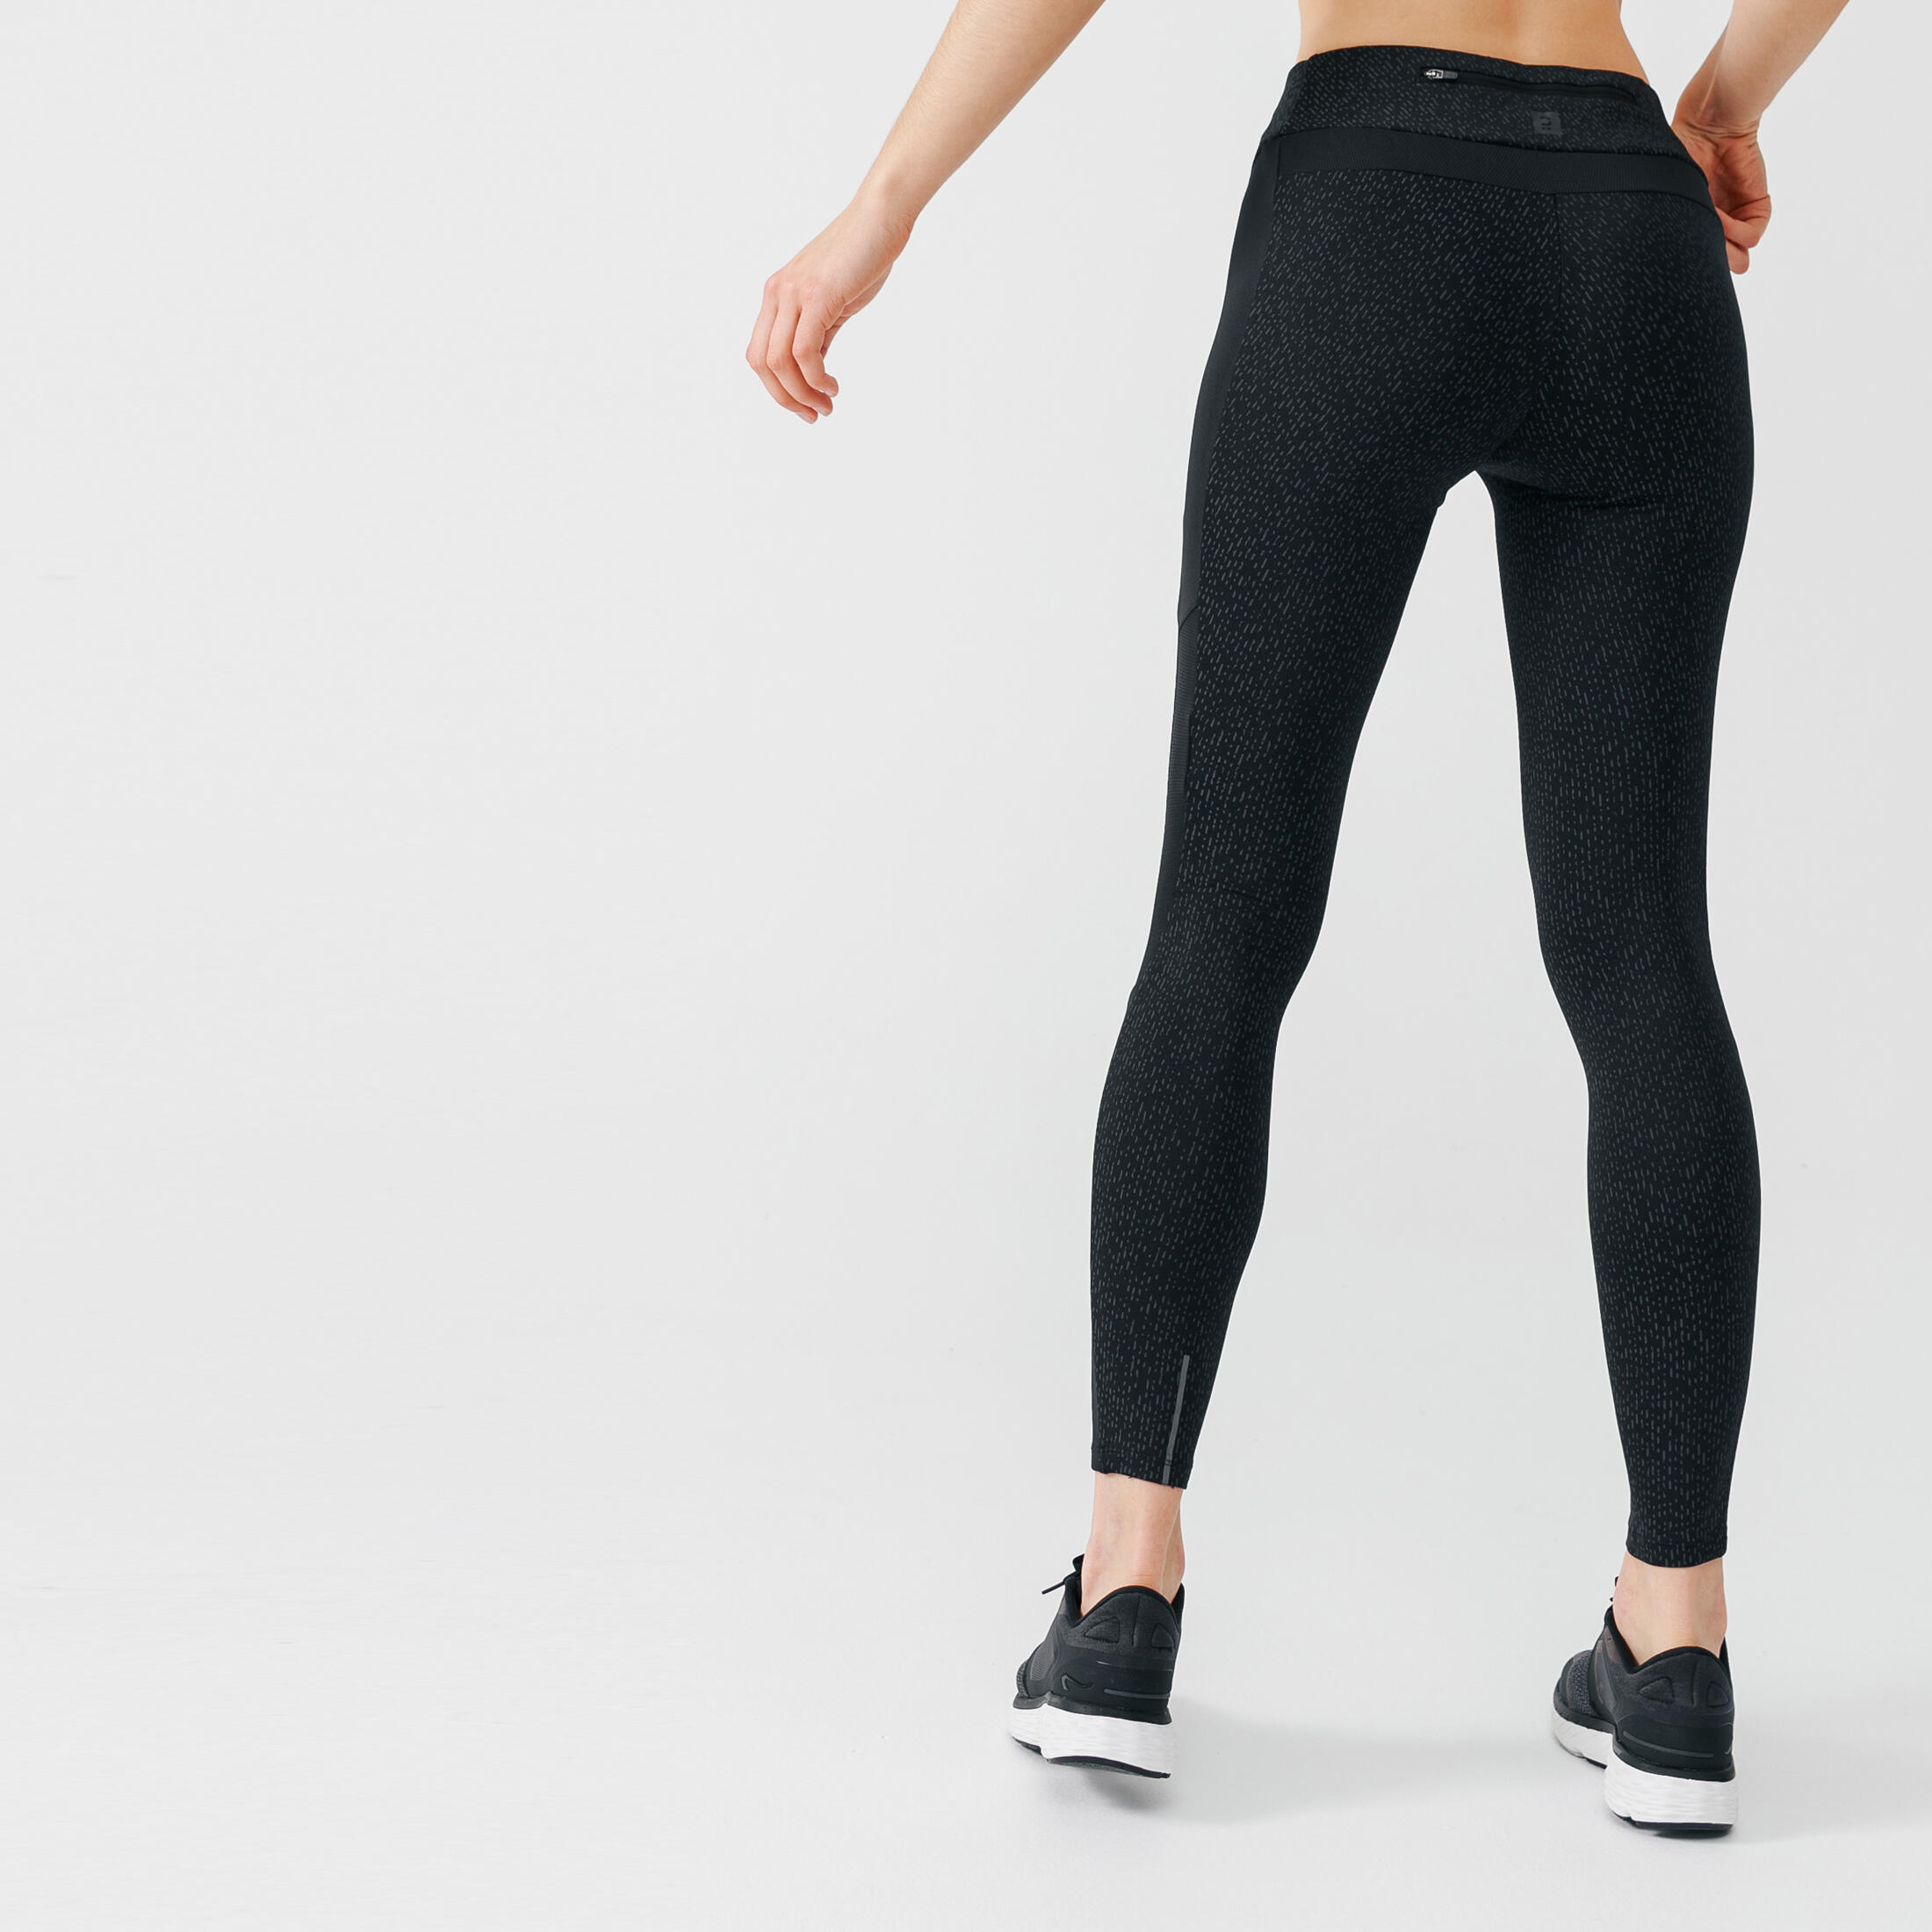  Women's Warm+ Running Long Leggings - Black with Reflective Motifs 4/9